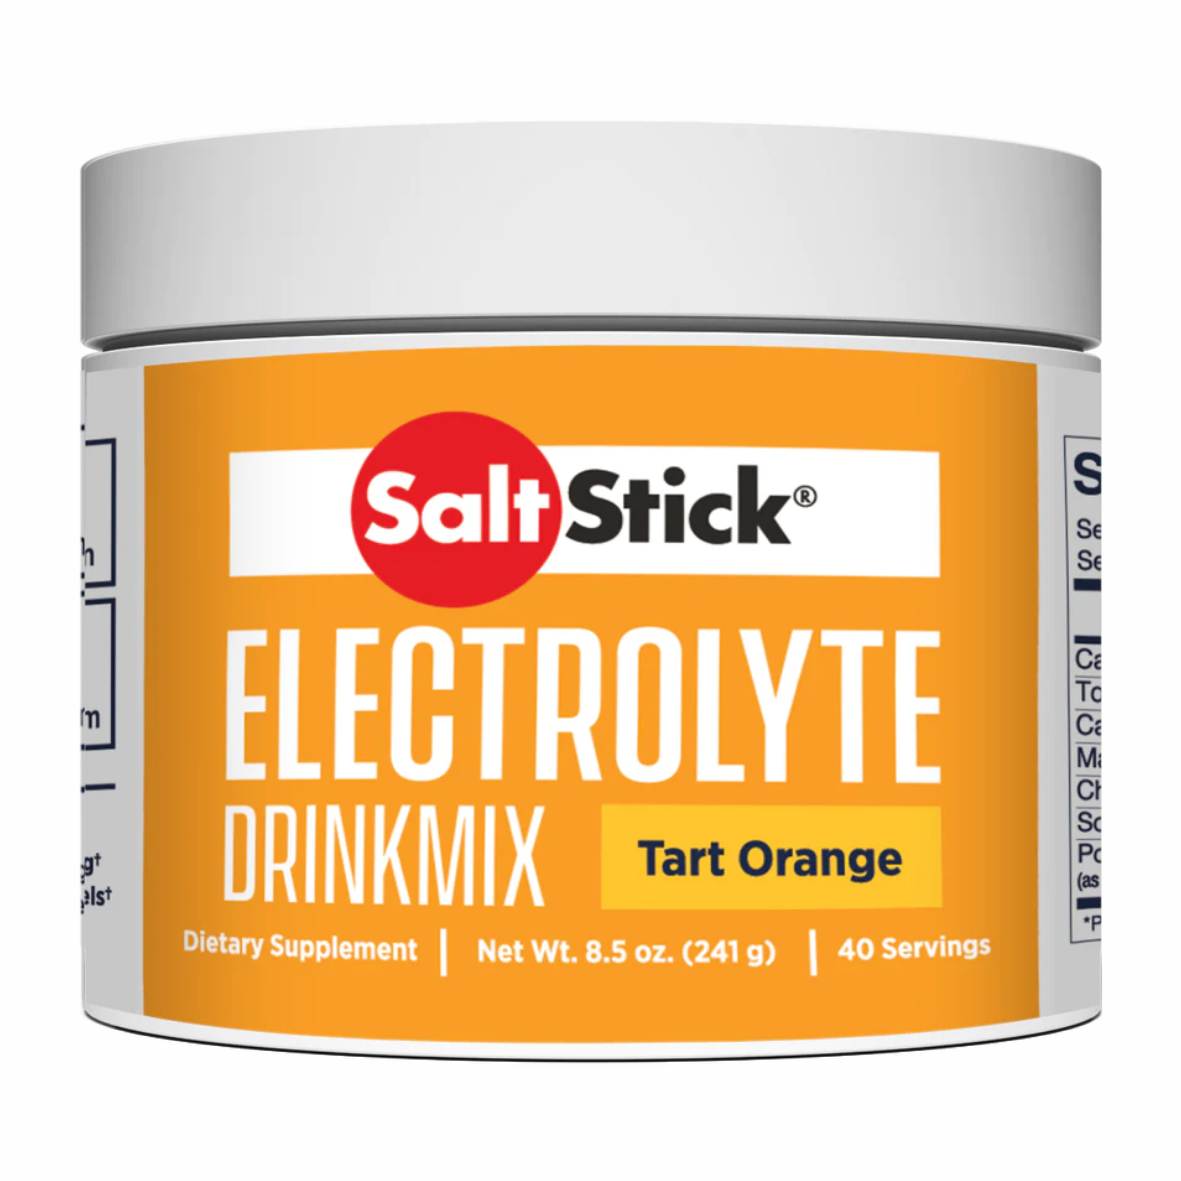 SaltStick Tart Orange Electrolyte Drink Mix